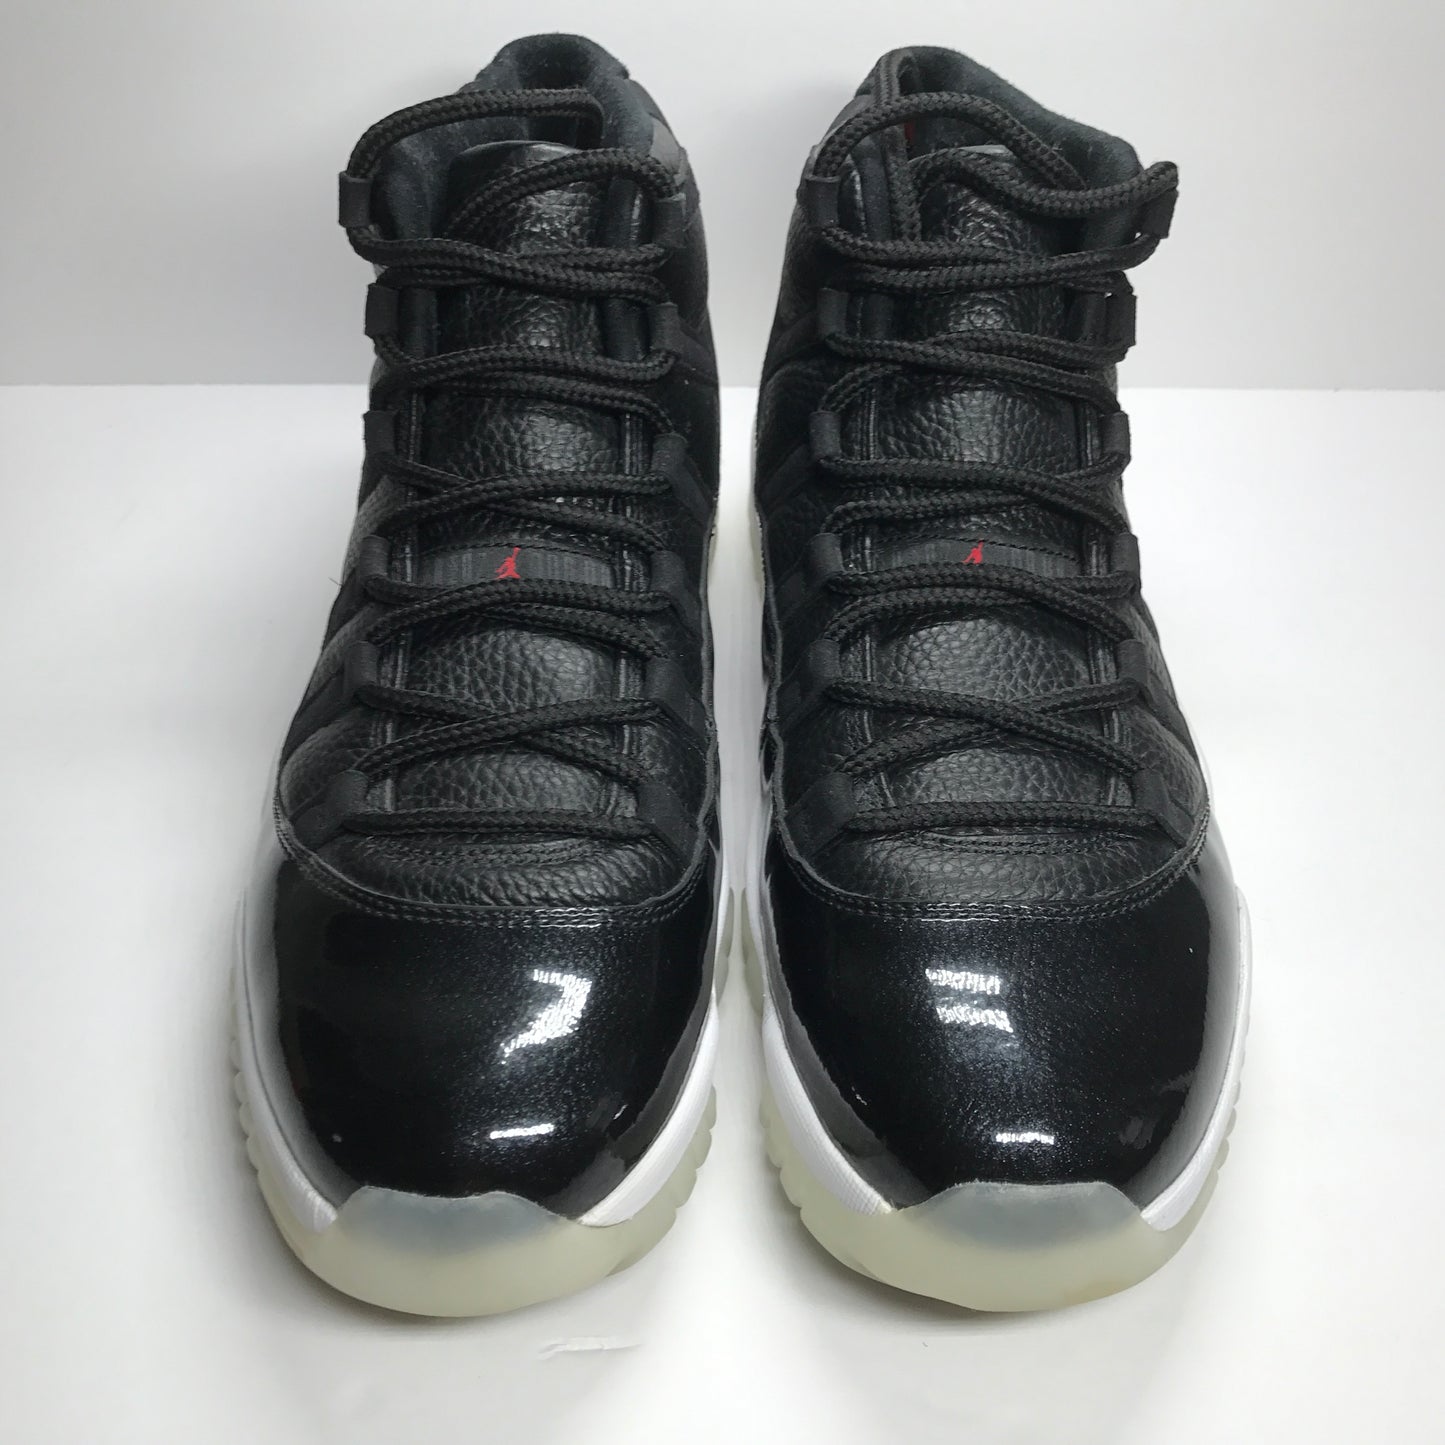 Nike Air Jordan 11 XI Retro 72-10 Taille 11.5